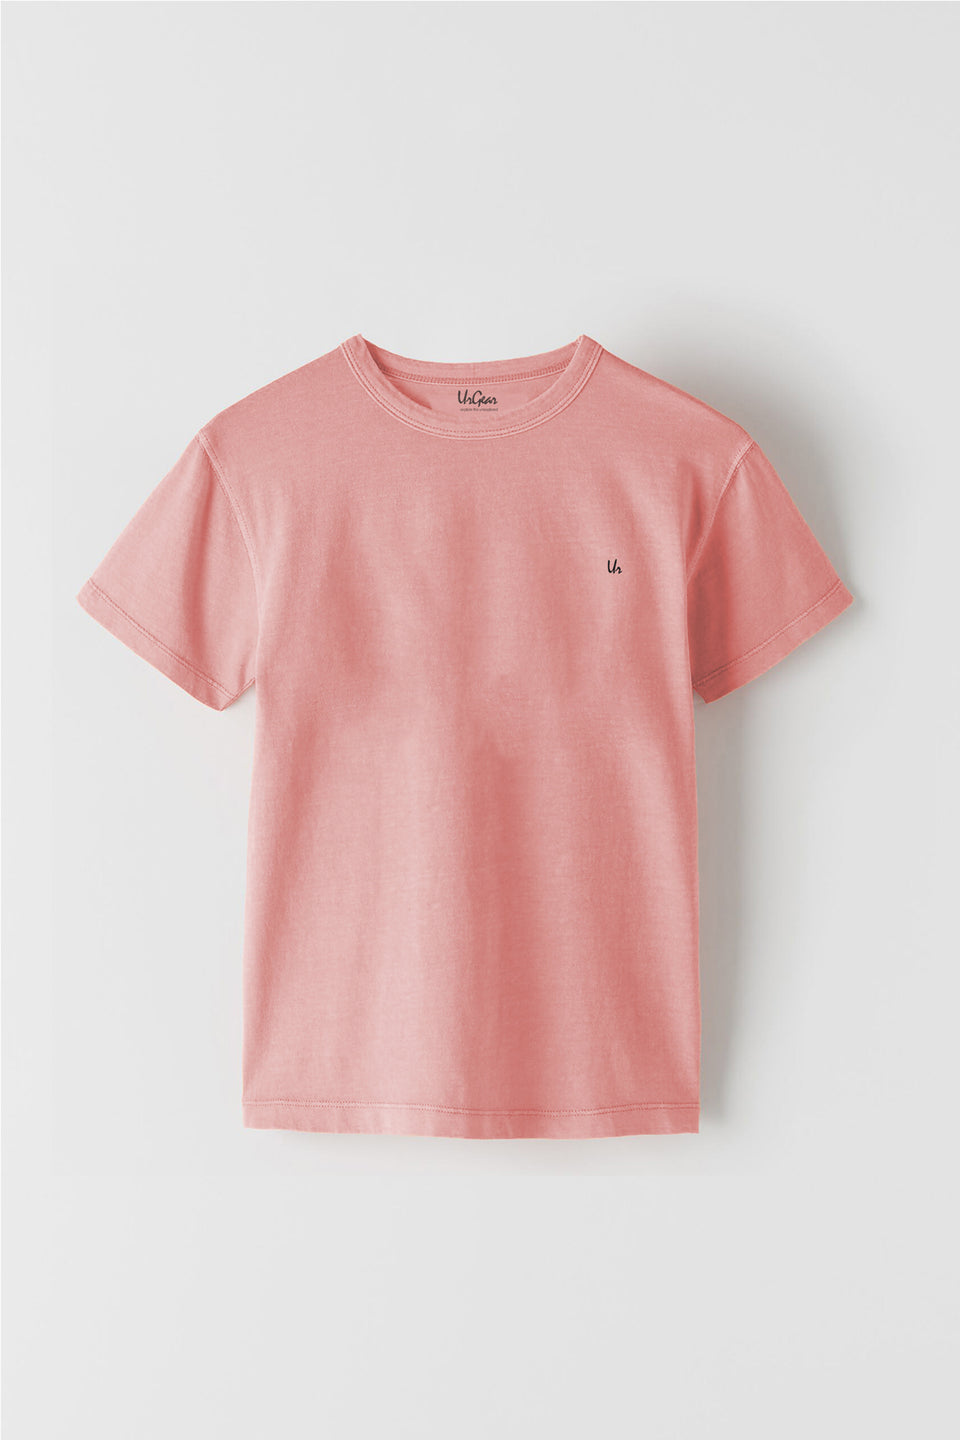 girls solid light pink round neck t-shirt